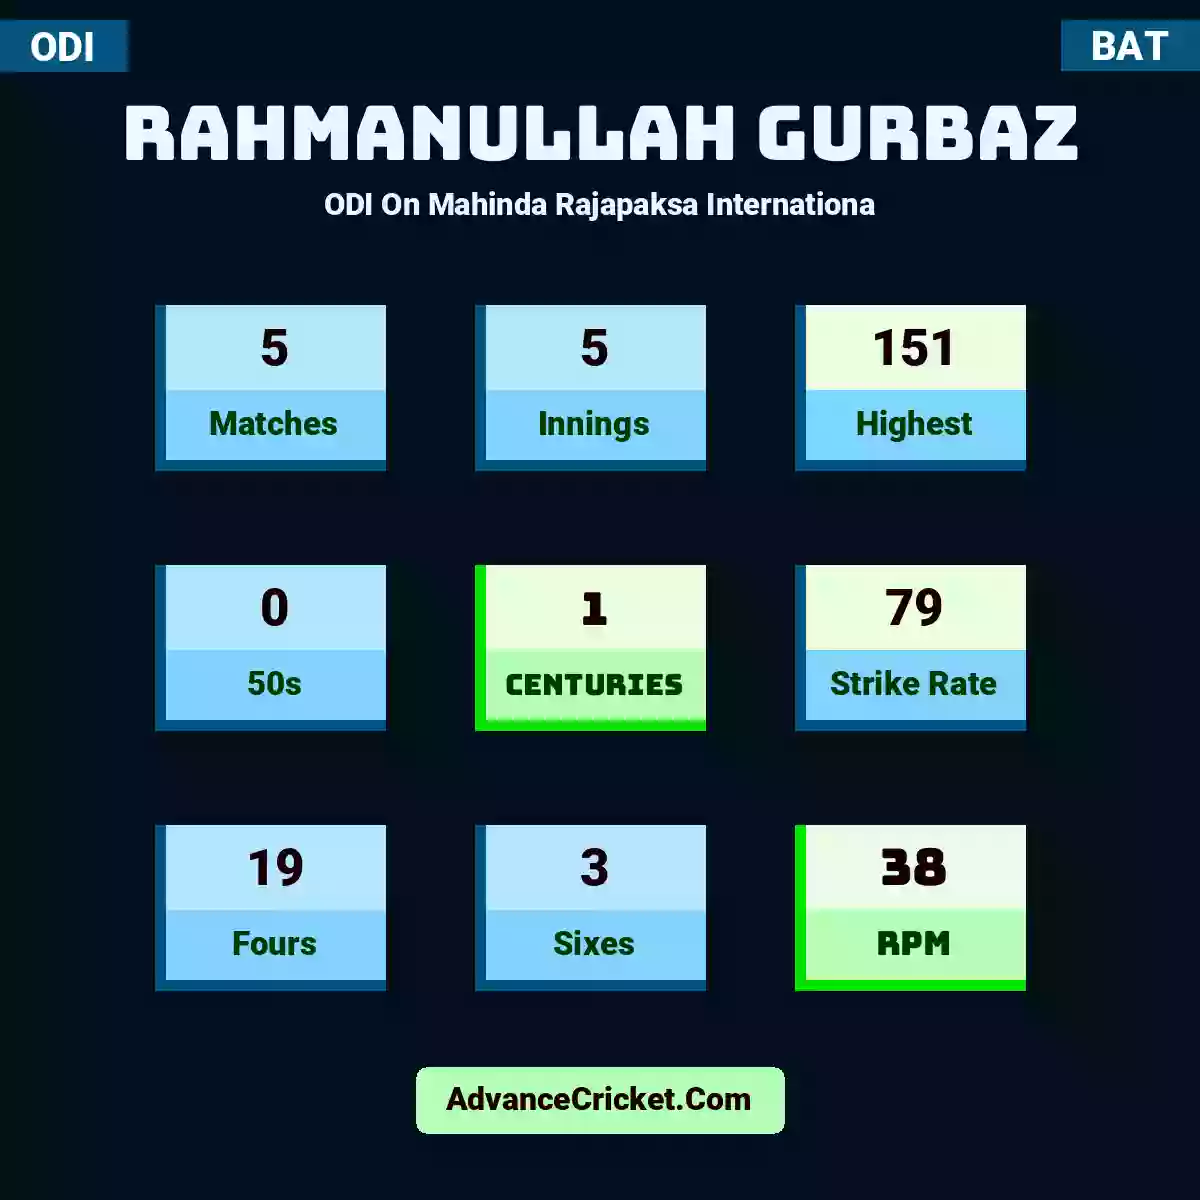 Rahmanullah Gurbaz ODI  On Mahinda Rajapaksa Internationa, Rahmanullah Gurbaz played 5 matches, scored 151 runs as highest, 0 half-centuries, and 1 centuries, with a strike rate of 79. R.Gurbaz hit 19 fours and 3 sixes, with an RPM of 38.